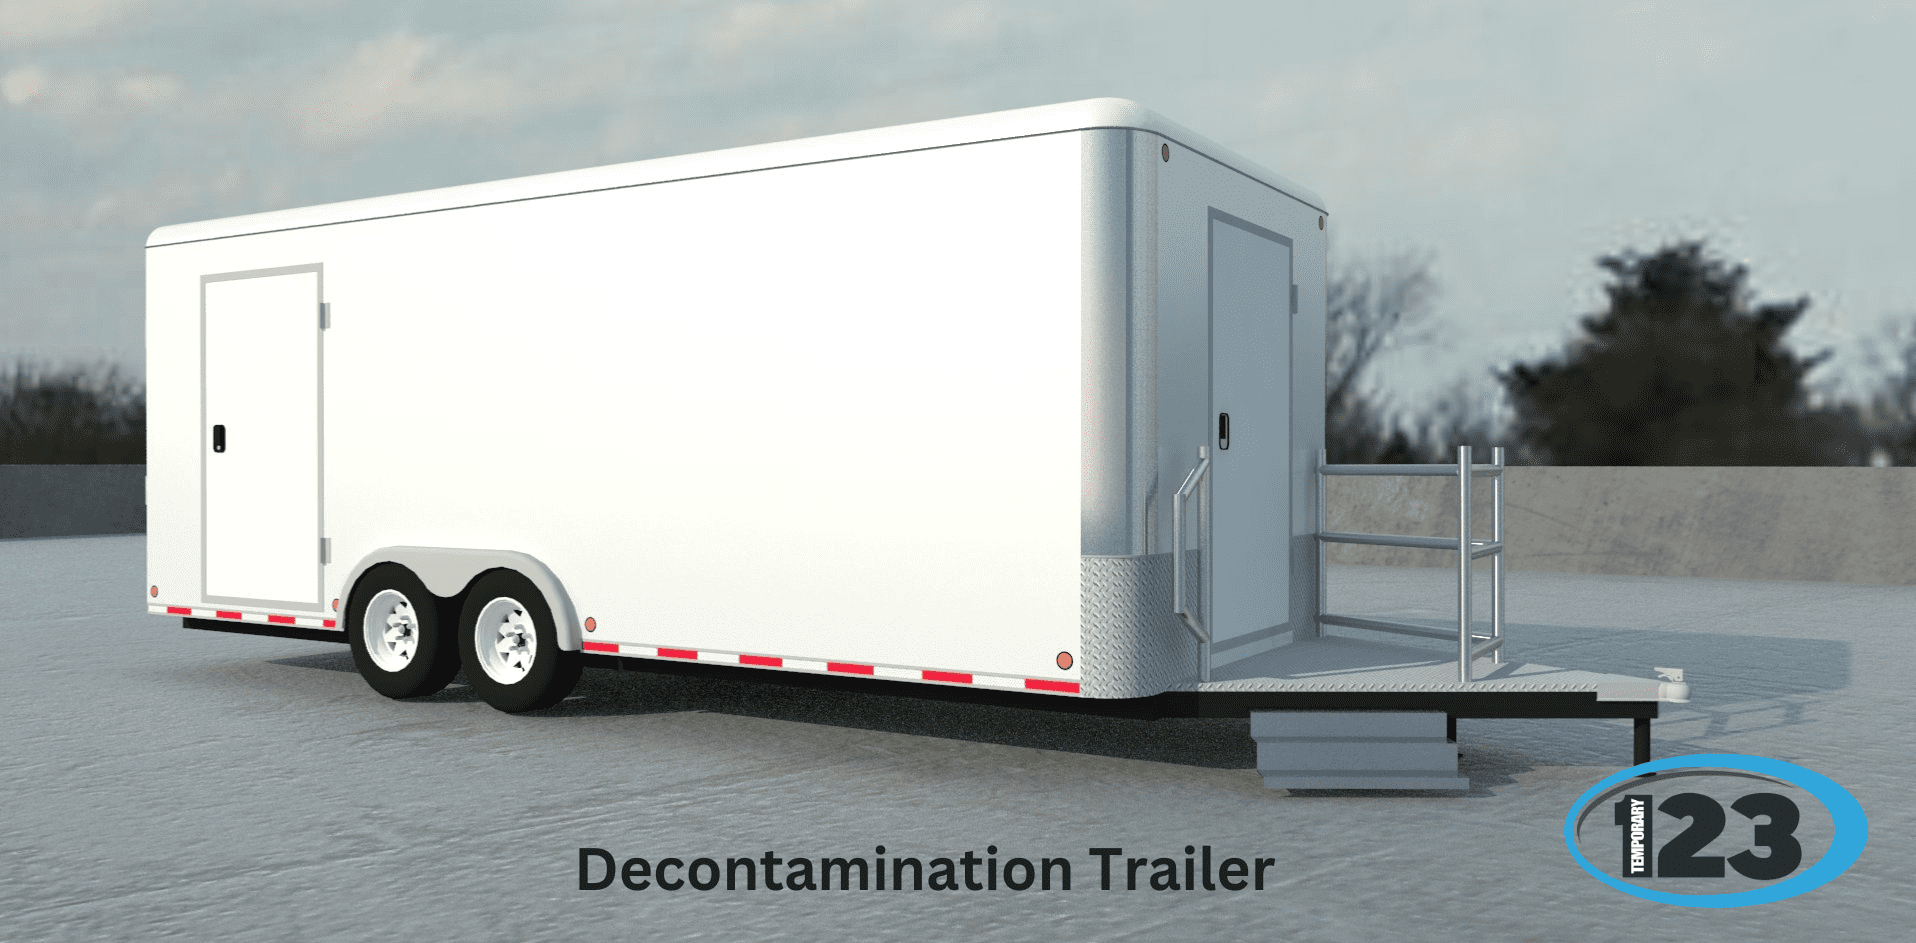 Decontamination Trailer